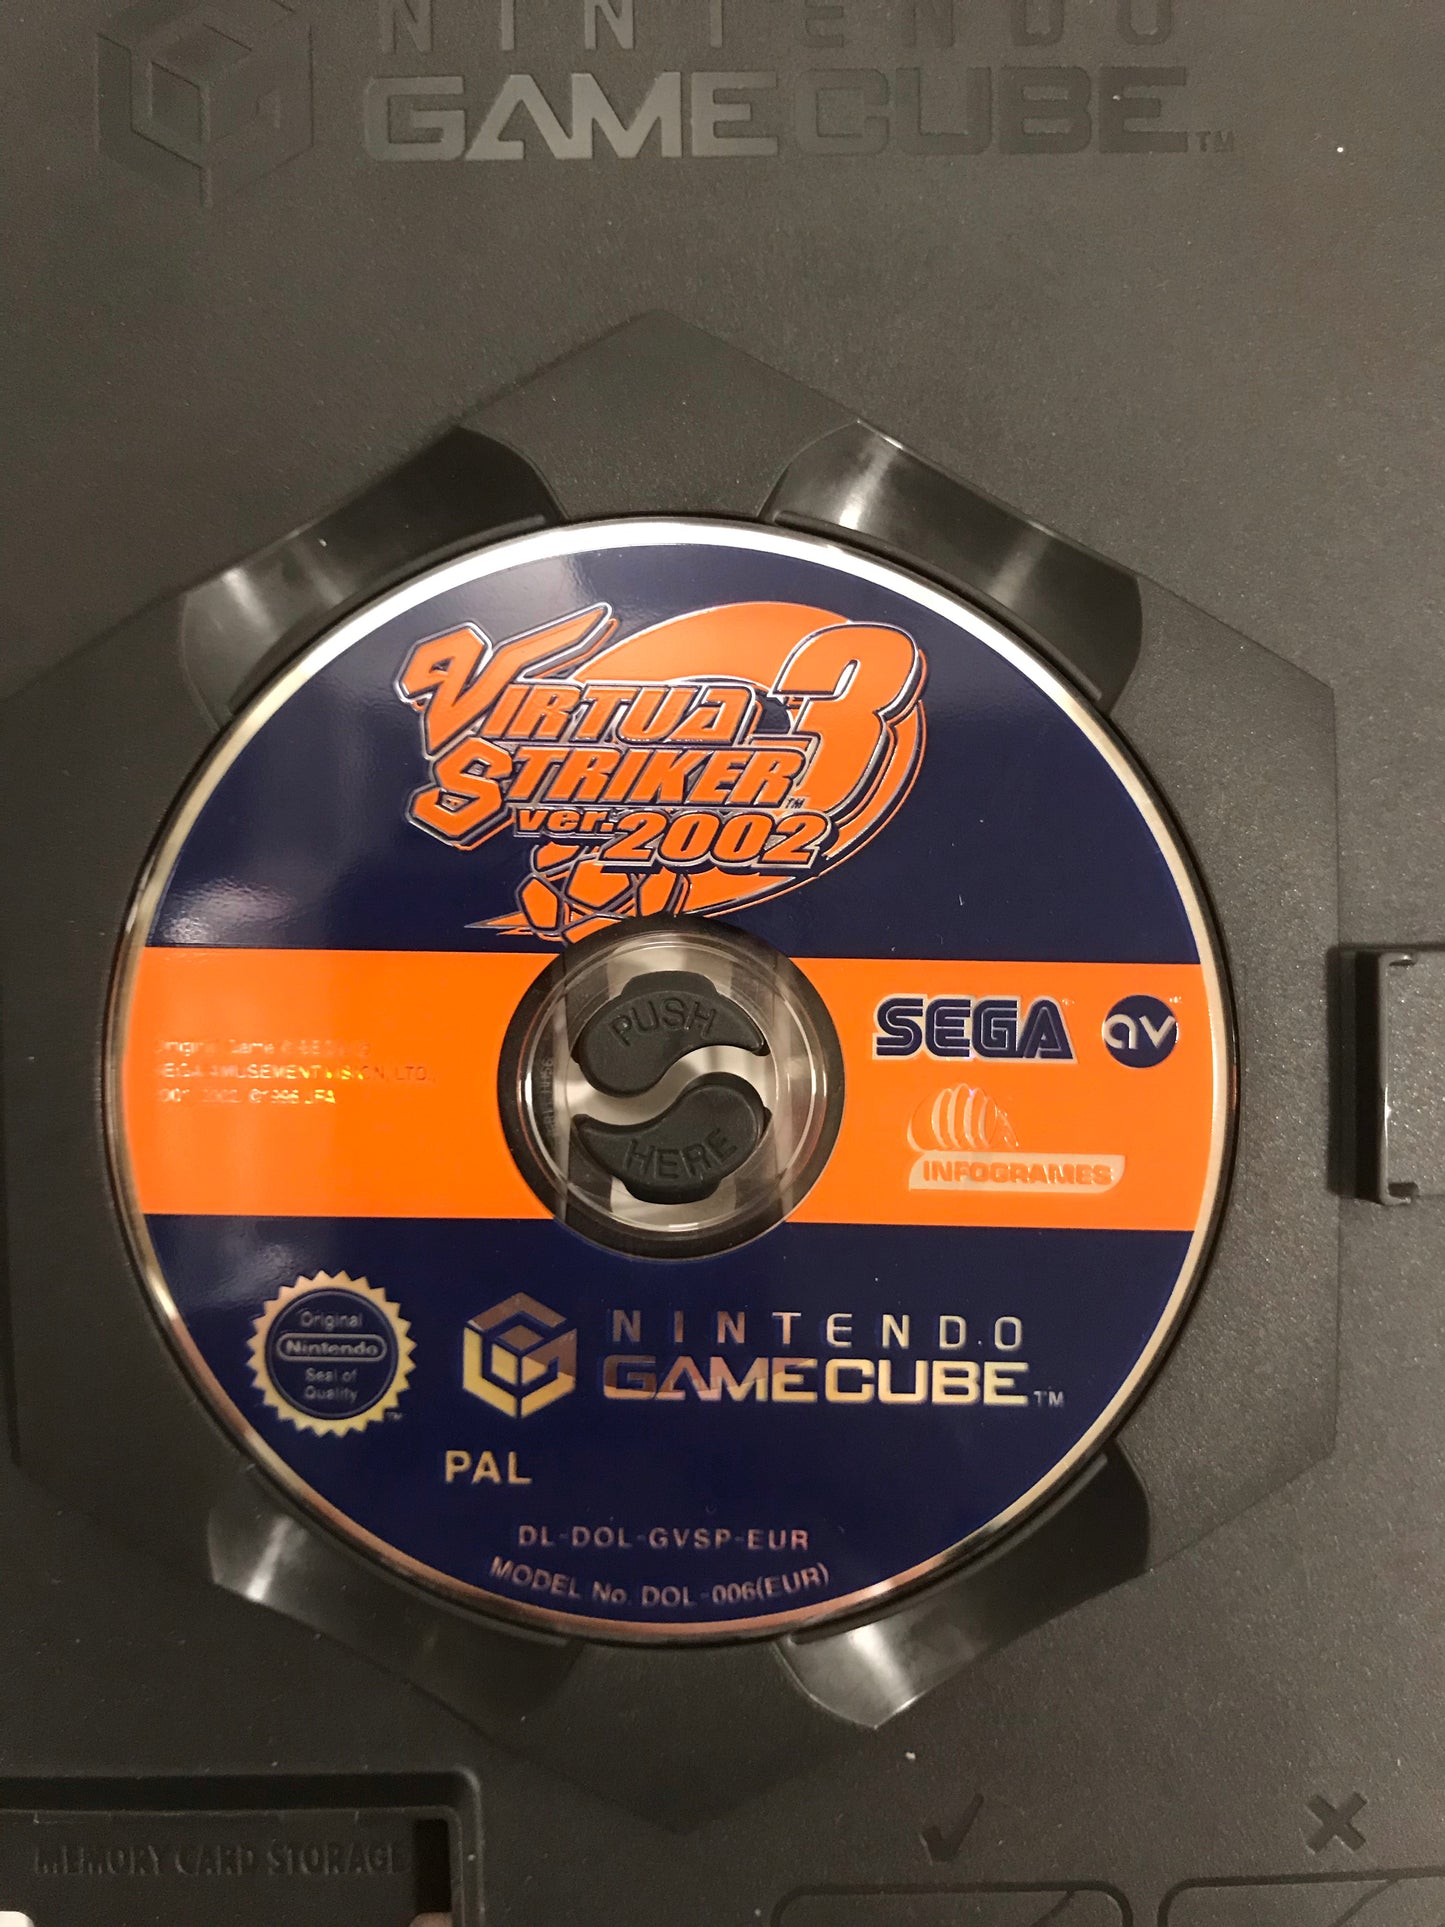 virtua striker 3 version 2002 PAL Nintendo gamecube avec notice